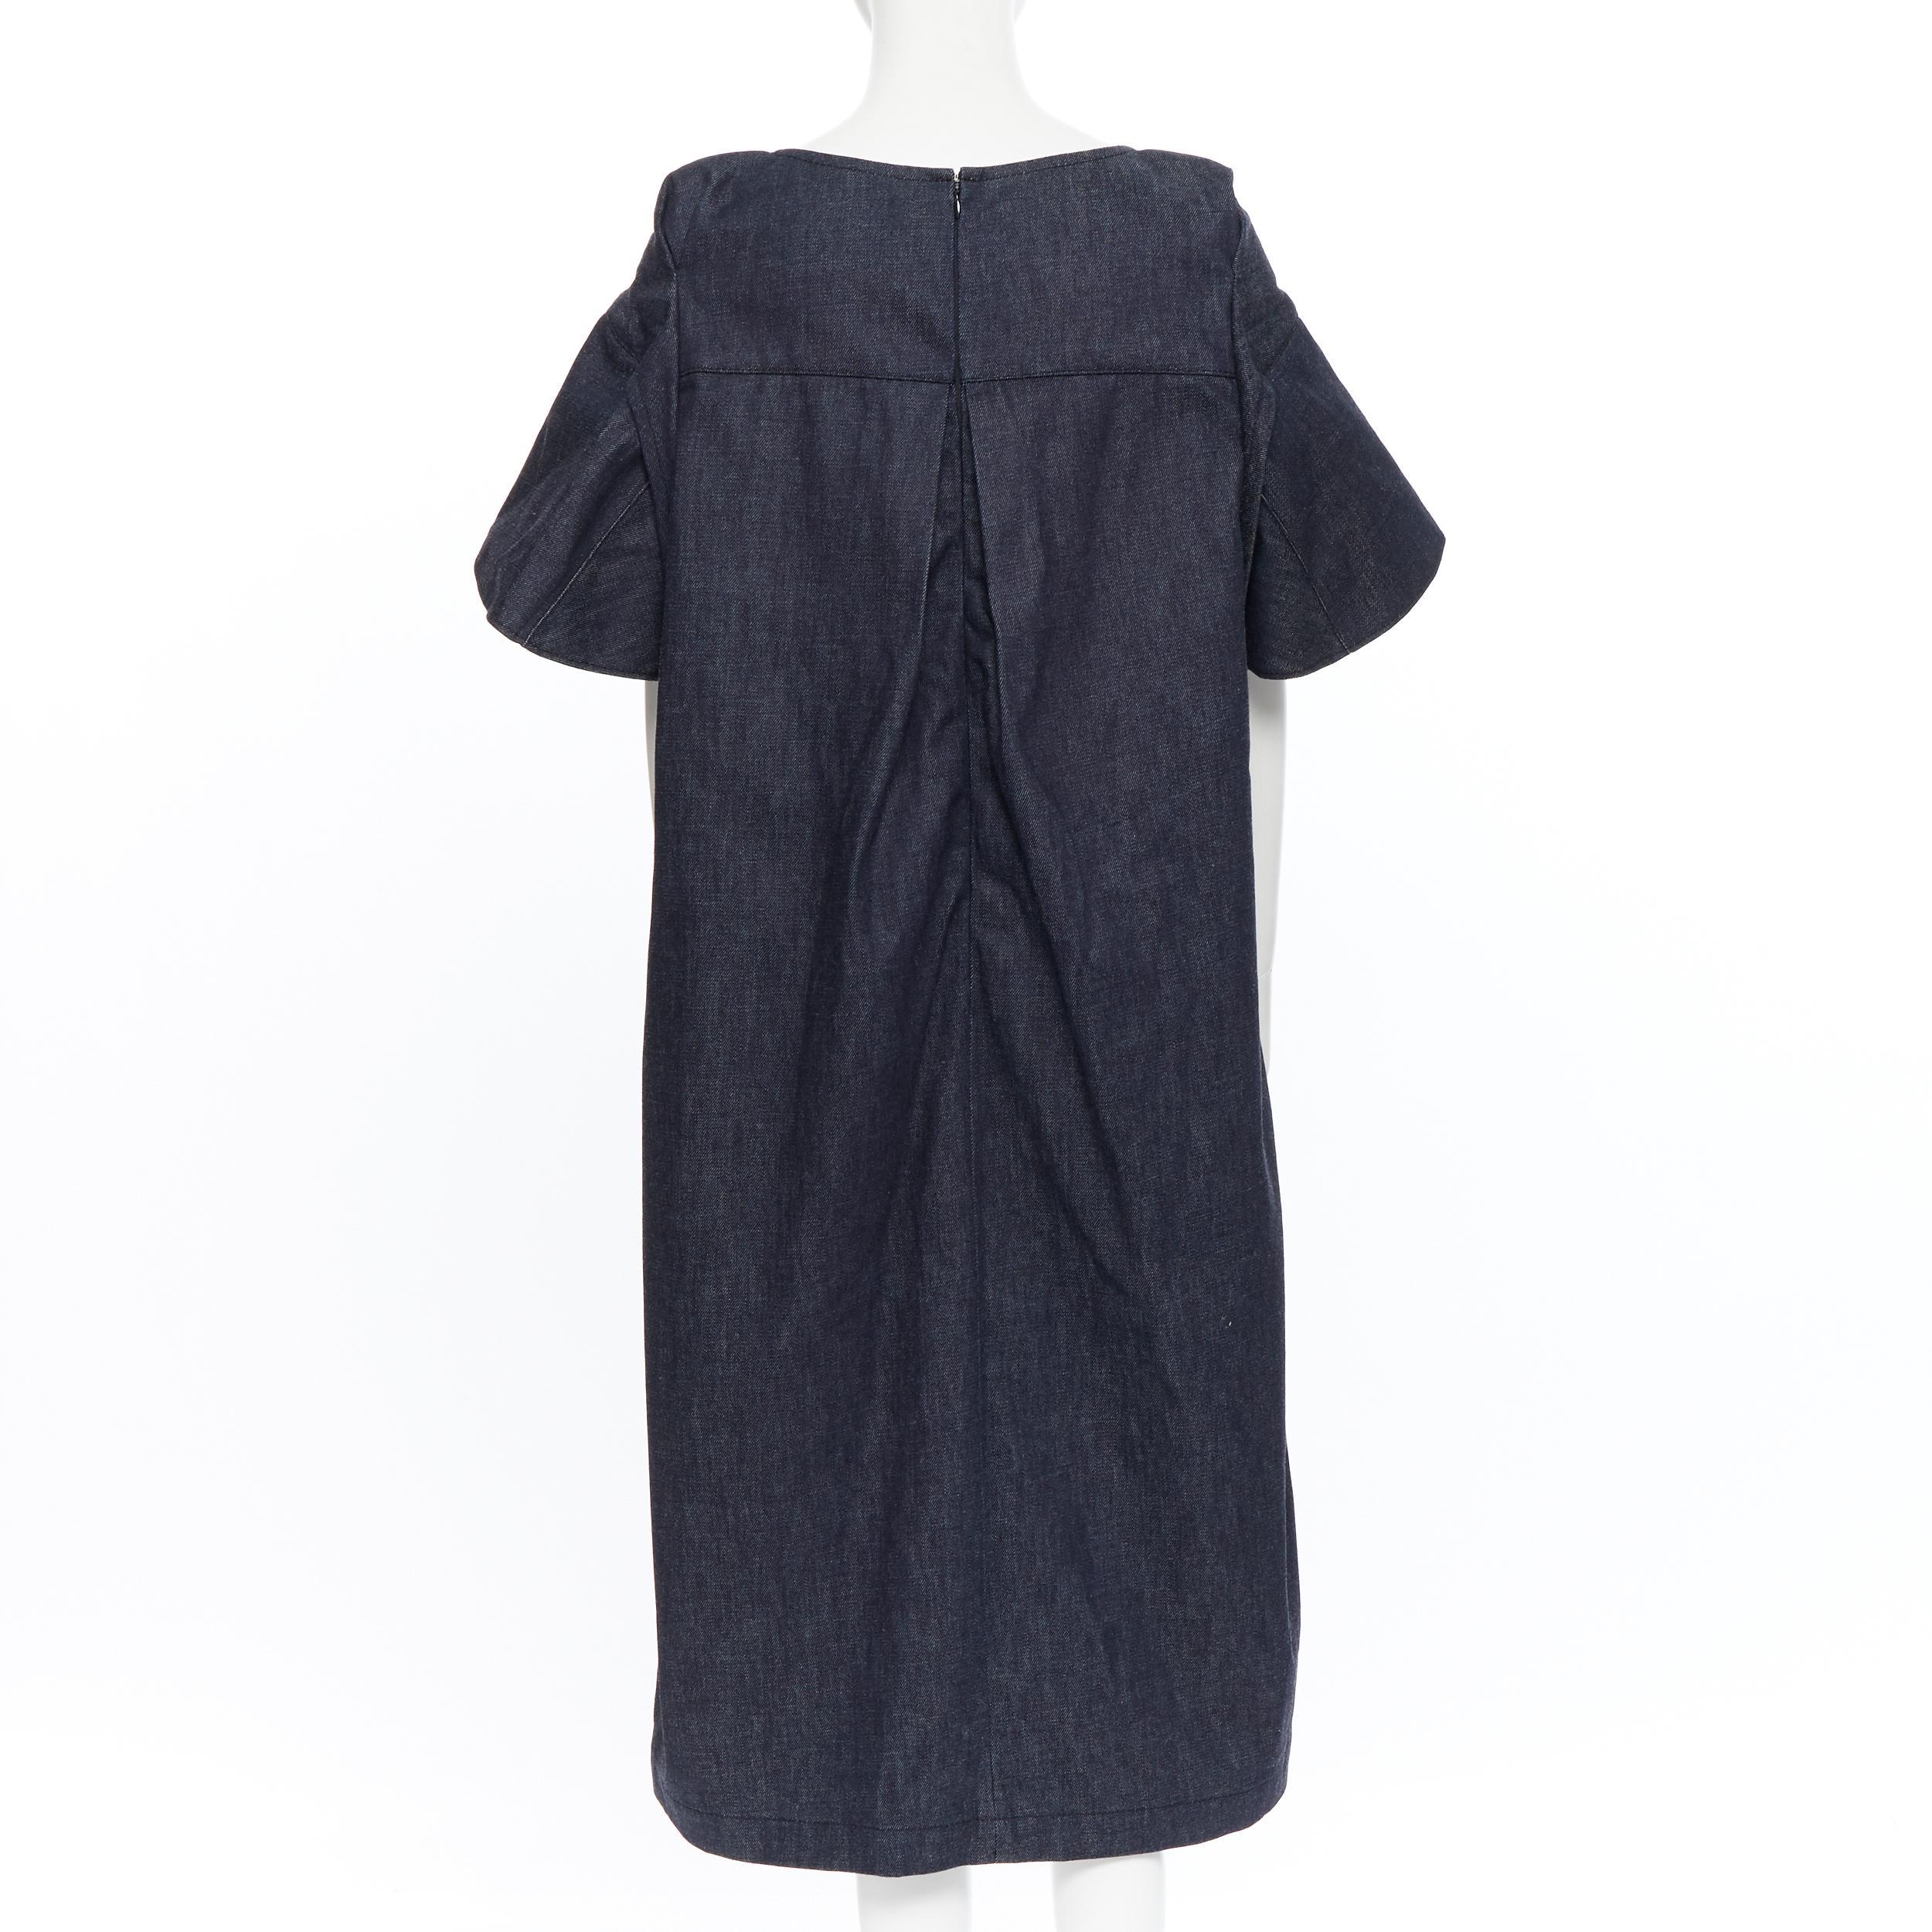 Blue TRICOT COMME DES GARCONS dark indigo blue denim ruffle sleeve casual dress S